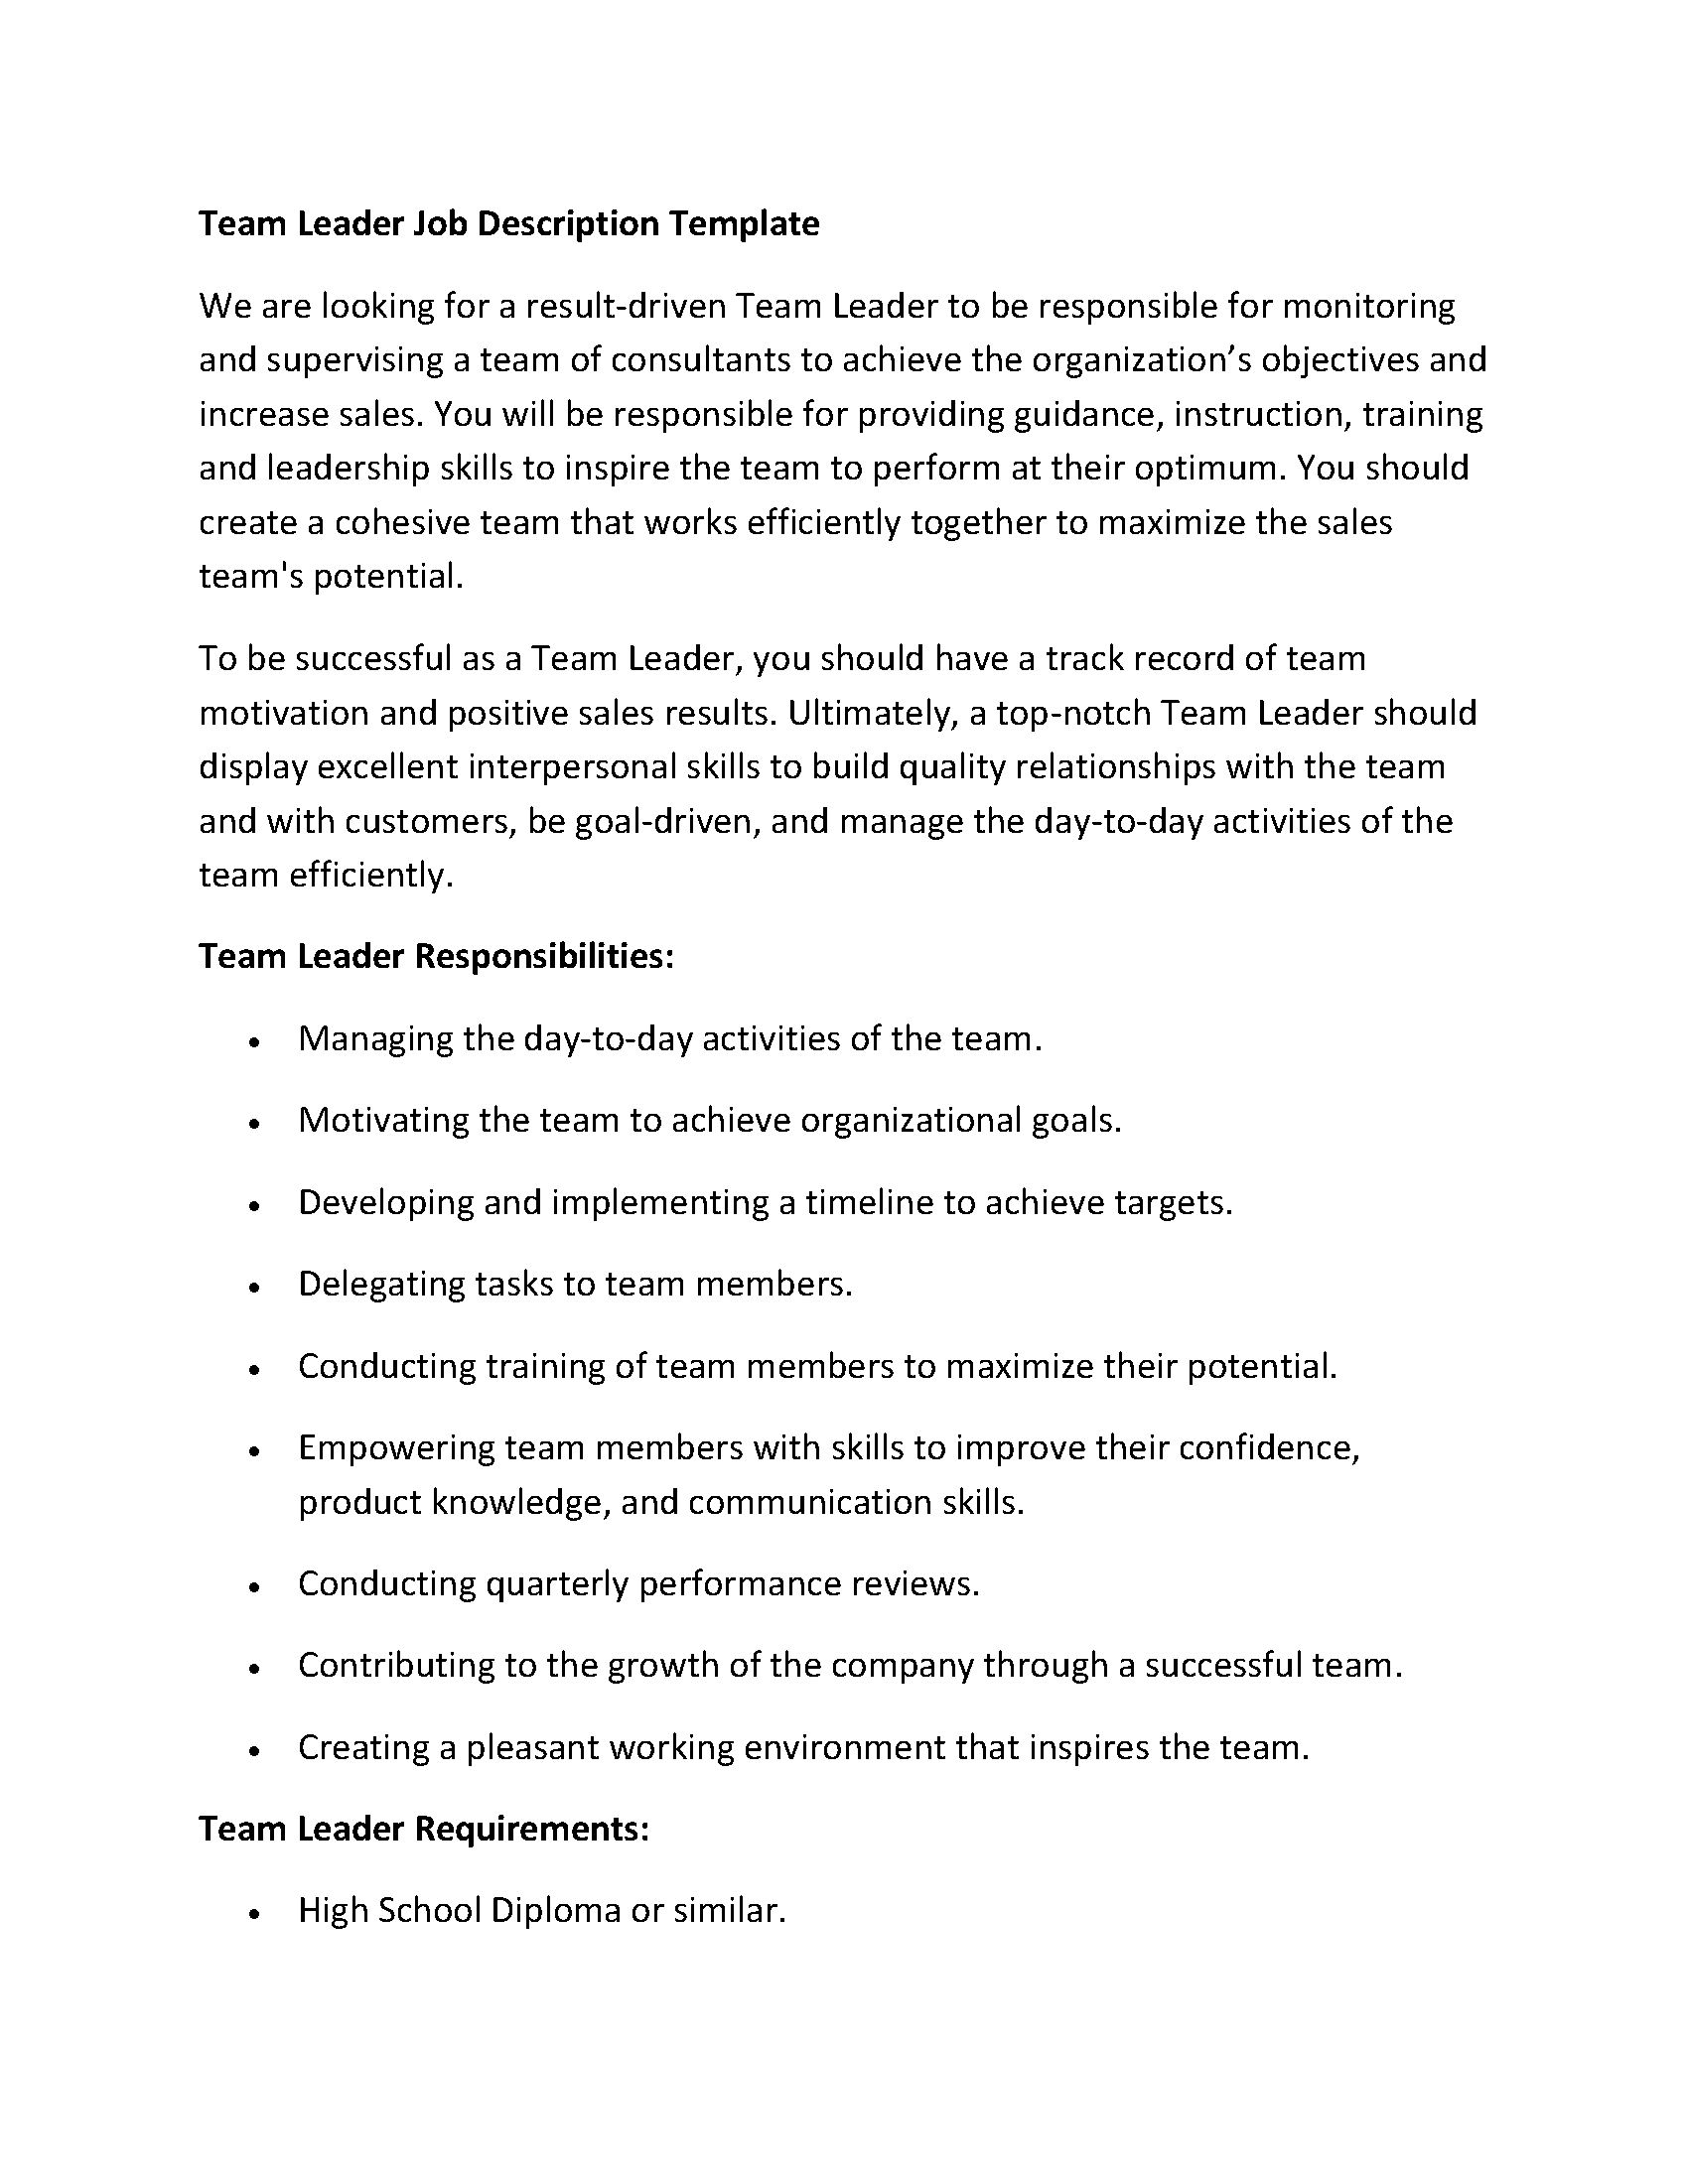 Team Leader Job Description Template